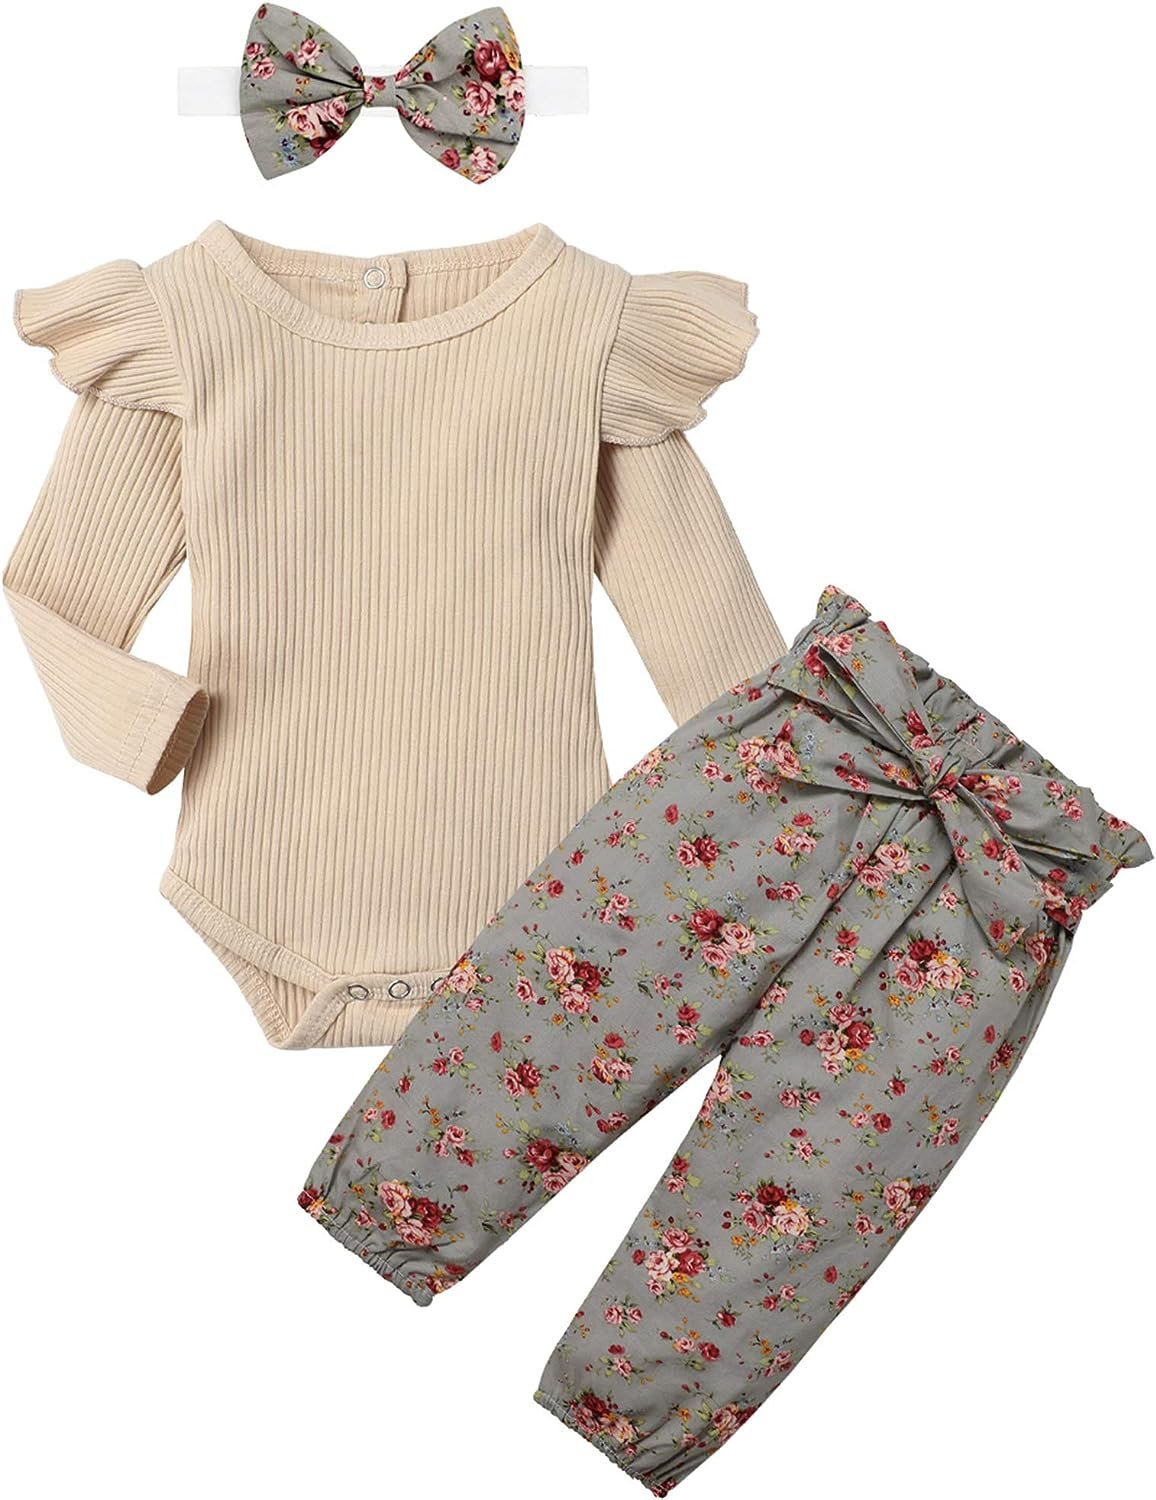 KANGKANG Baby Girls Clothes Cute Baby Clothes Girls Romper + Pant 3pcs Winter Outfit Newborn Light Brown